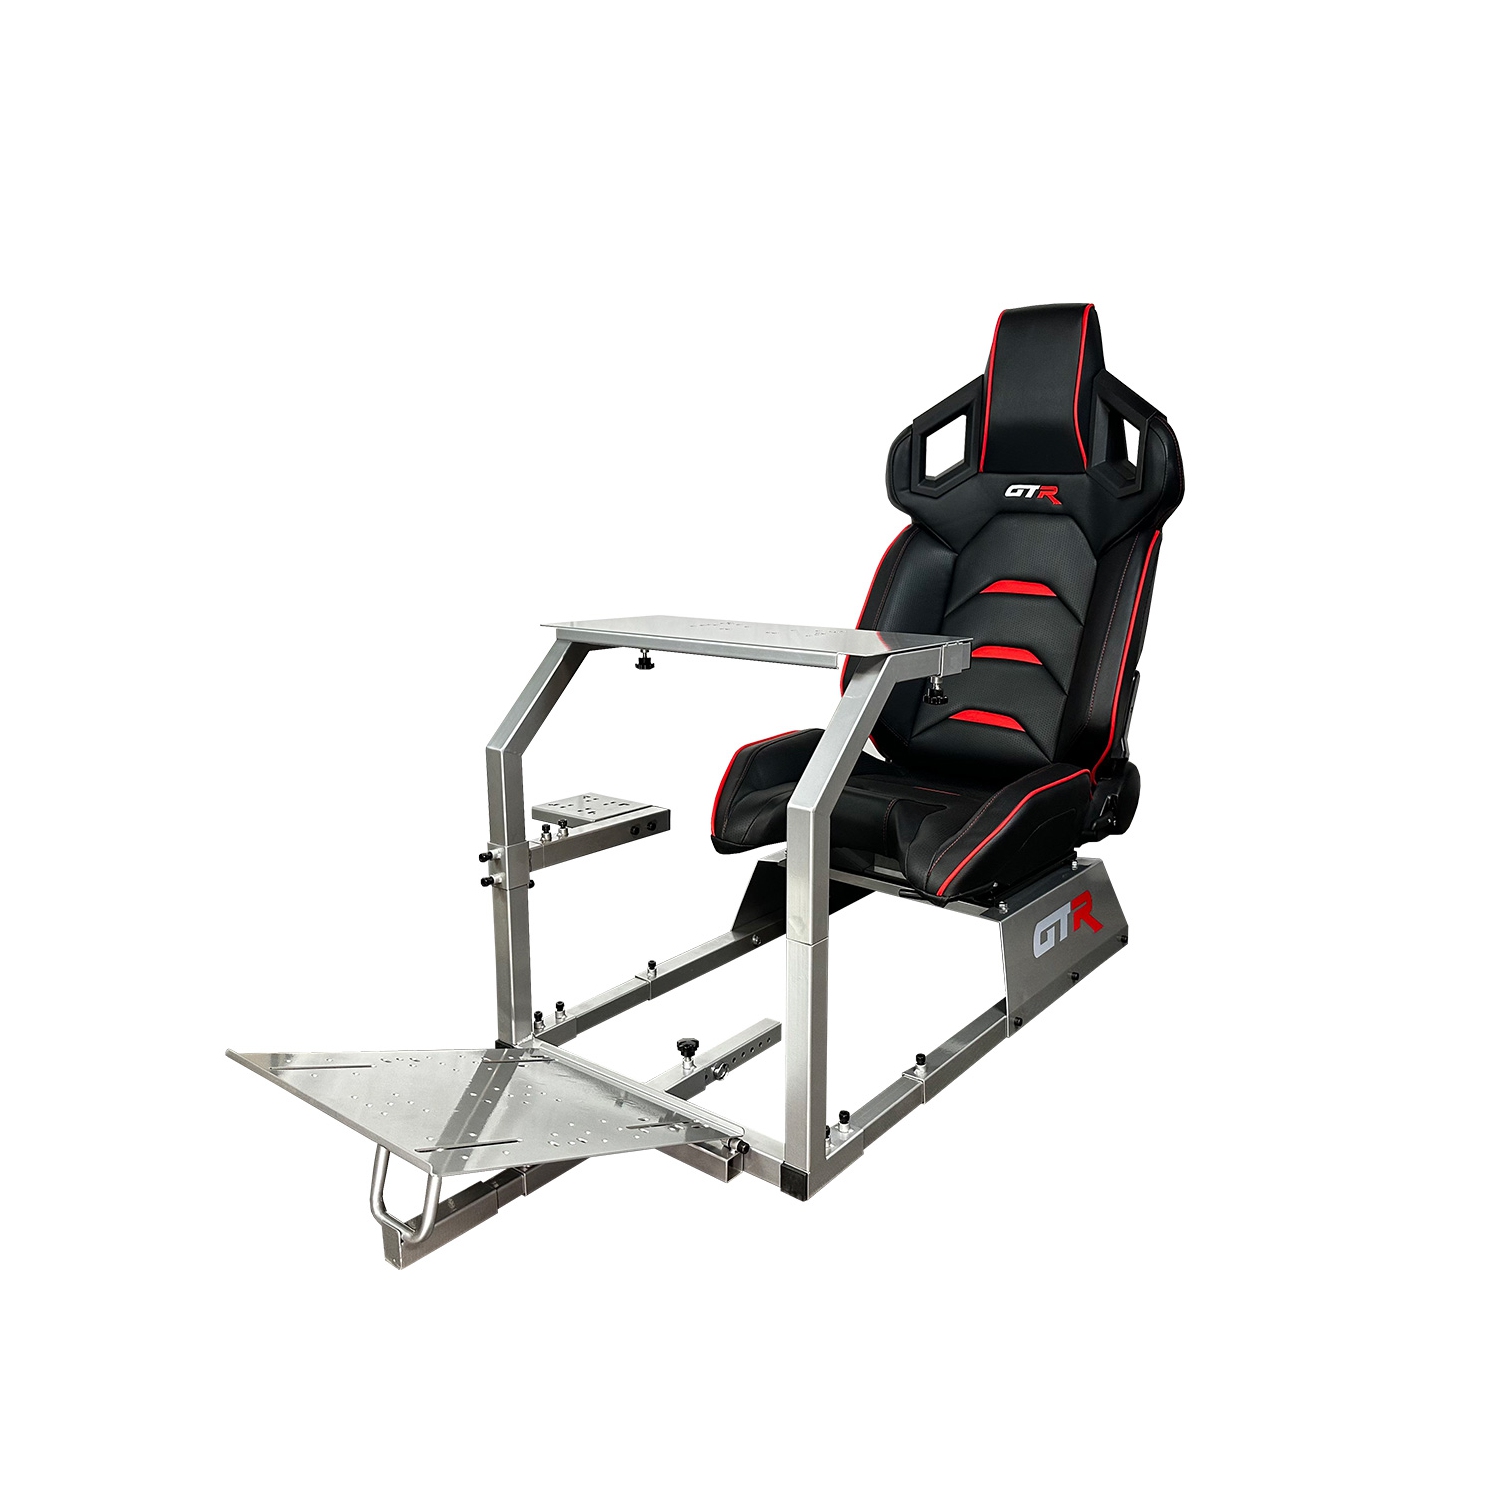 GTR Simulator GTA Model (Silver) Racing Simulator Cockpit with Black/Red Adjustable Leatherette Pista Seat